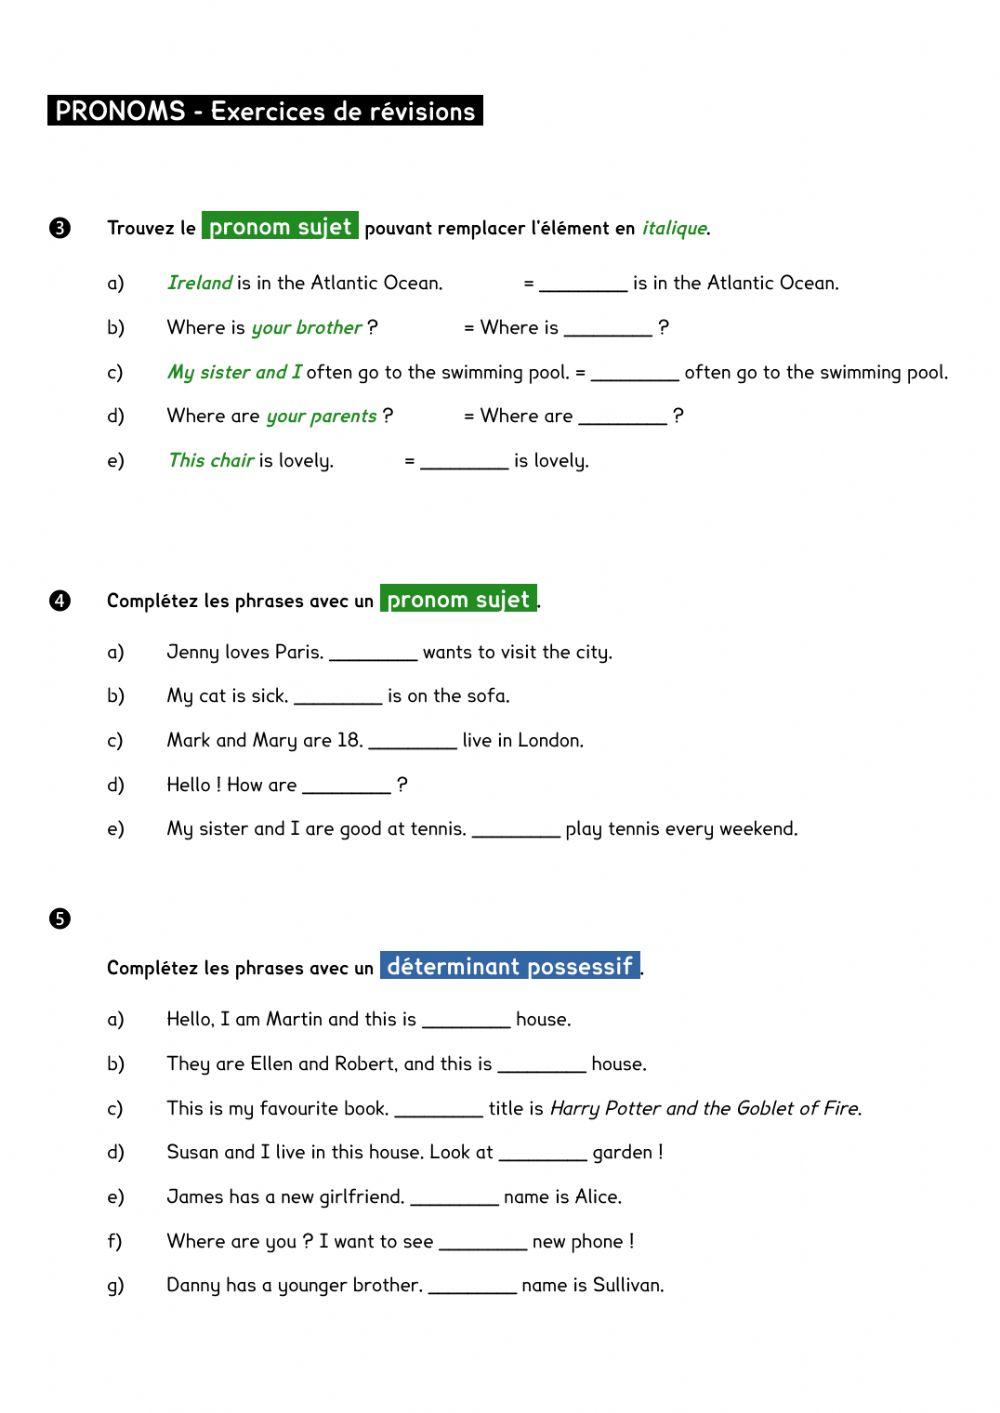 Pronouns (subject and possessive adjective)